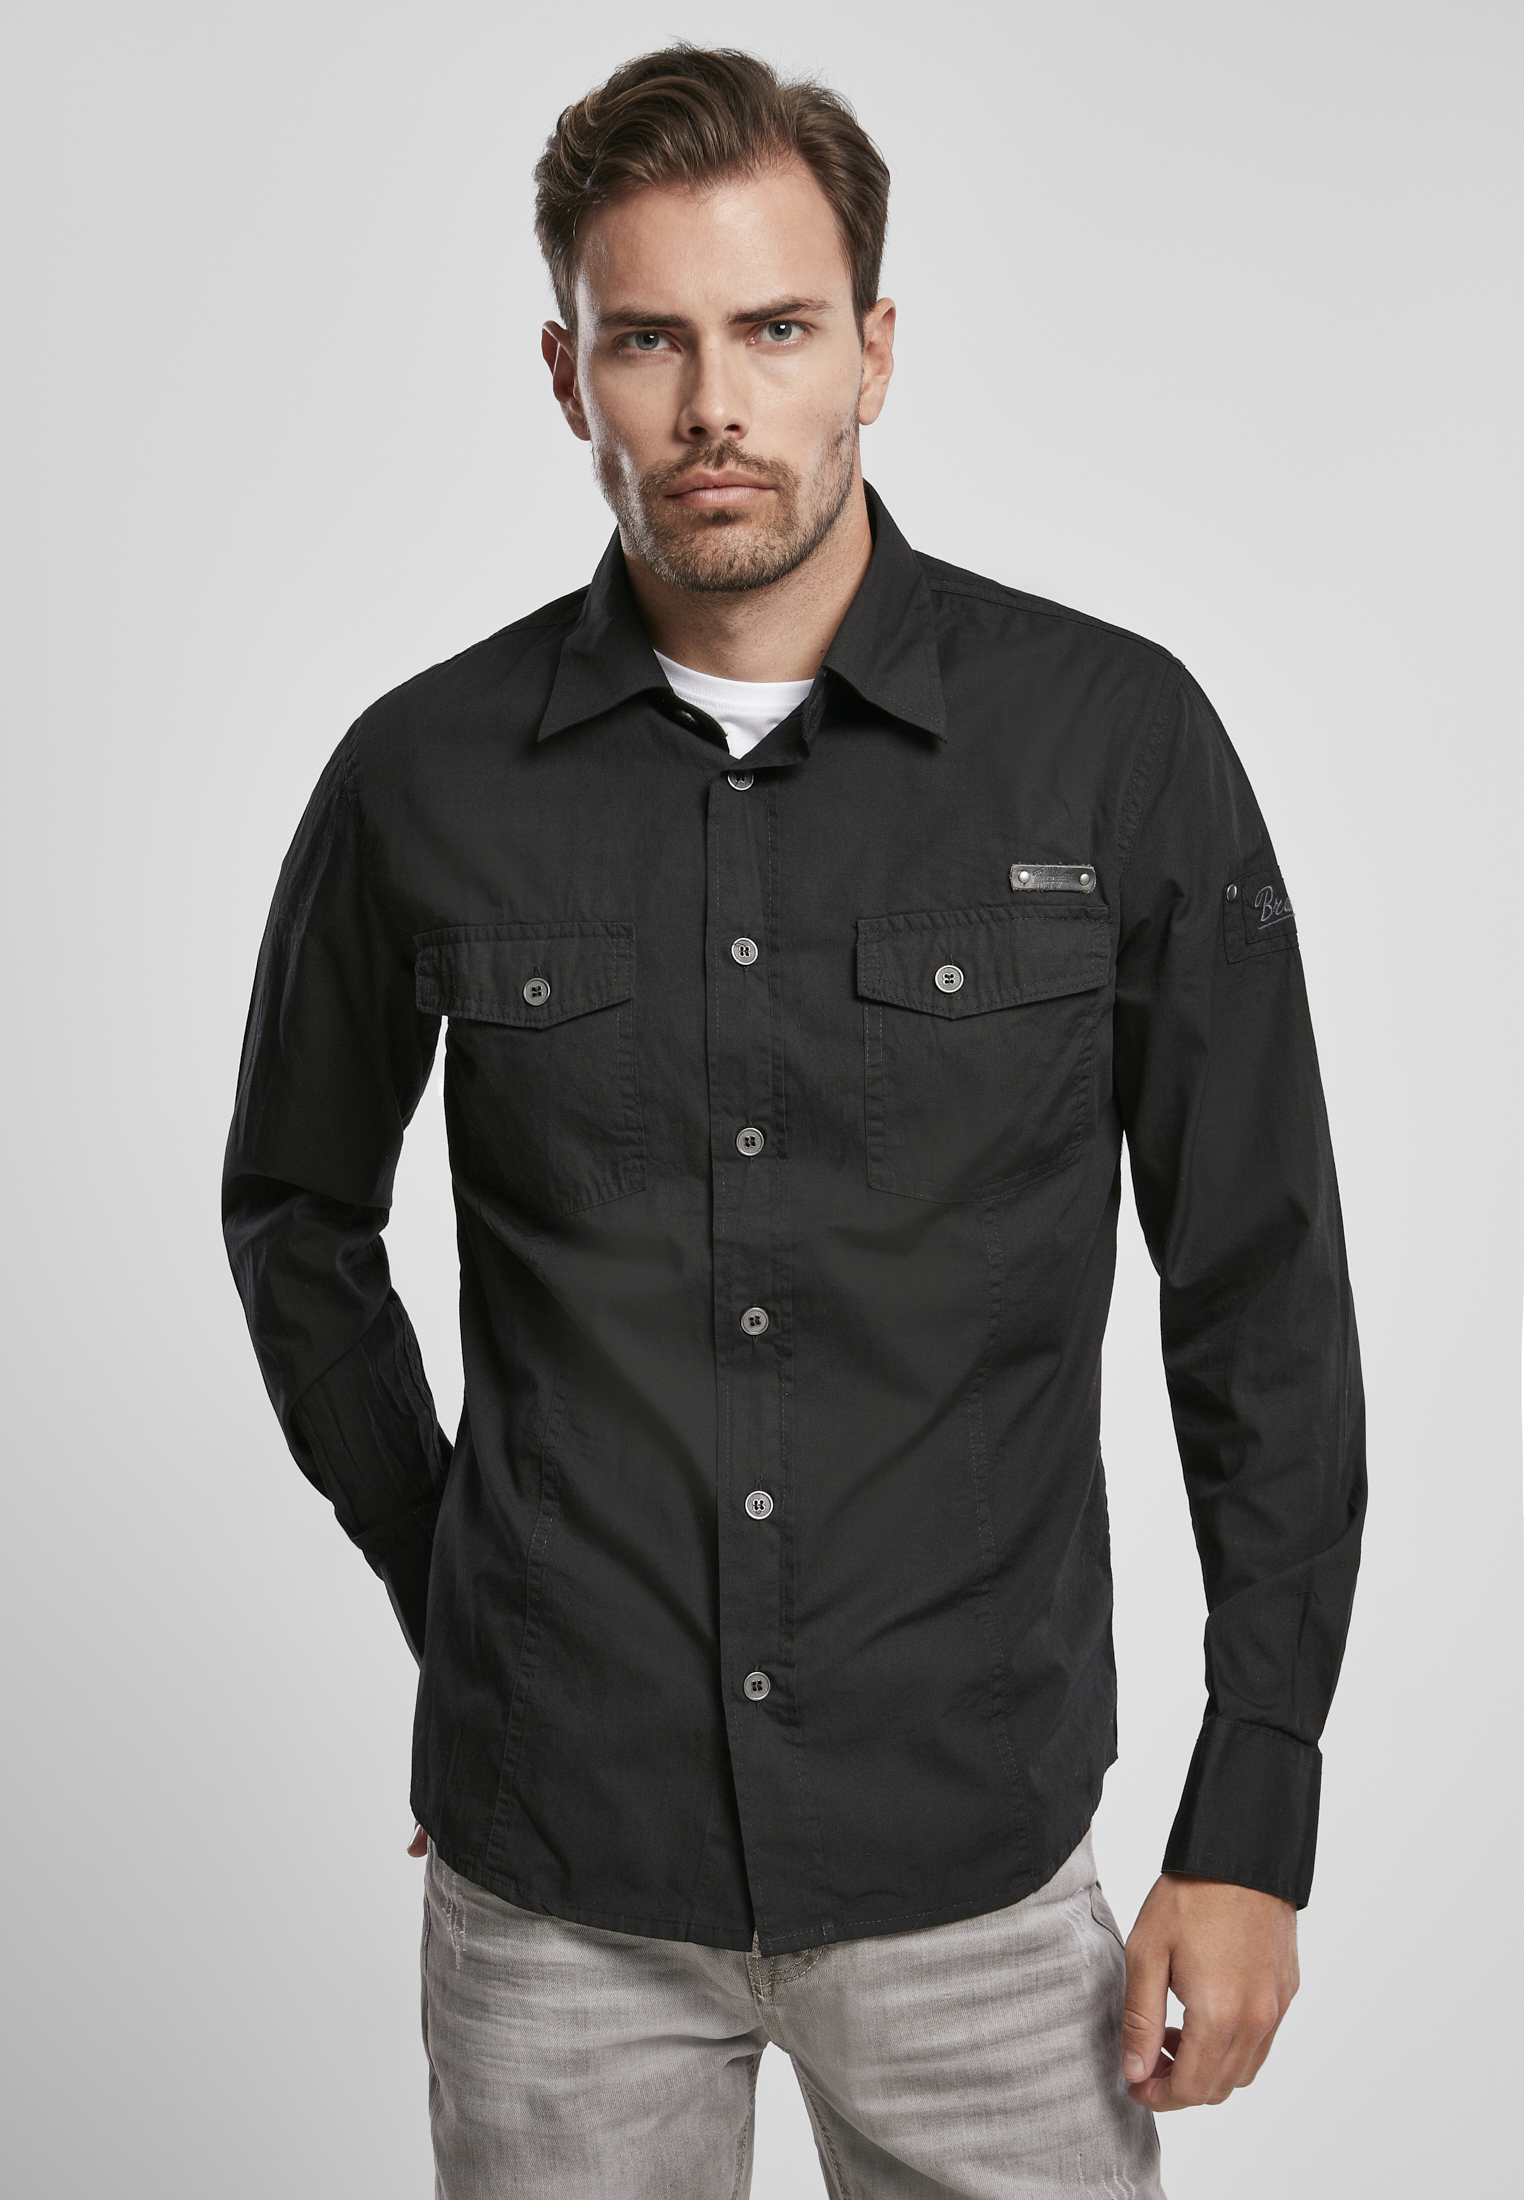 Hemden Slim Worker Shirt in Farbe tartan